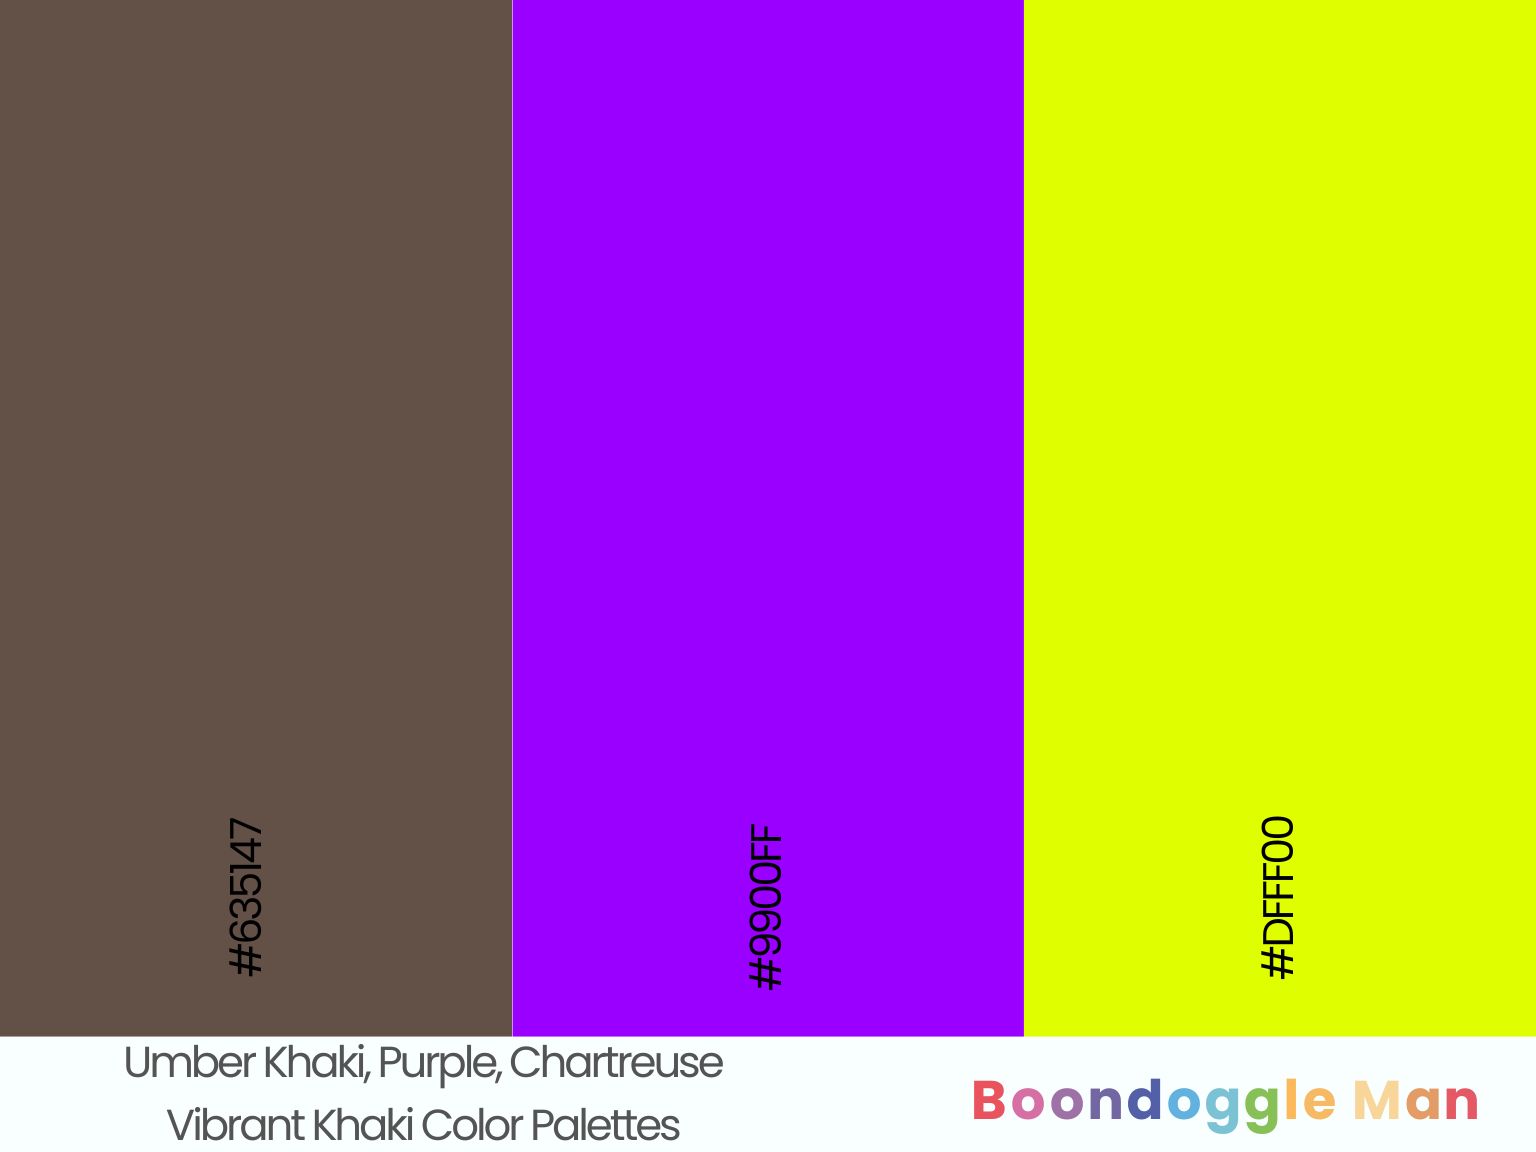 Umber Khaki, Purple, Chartreuse